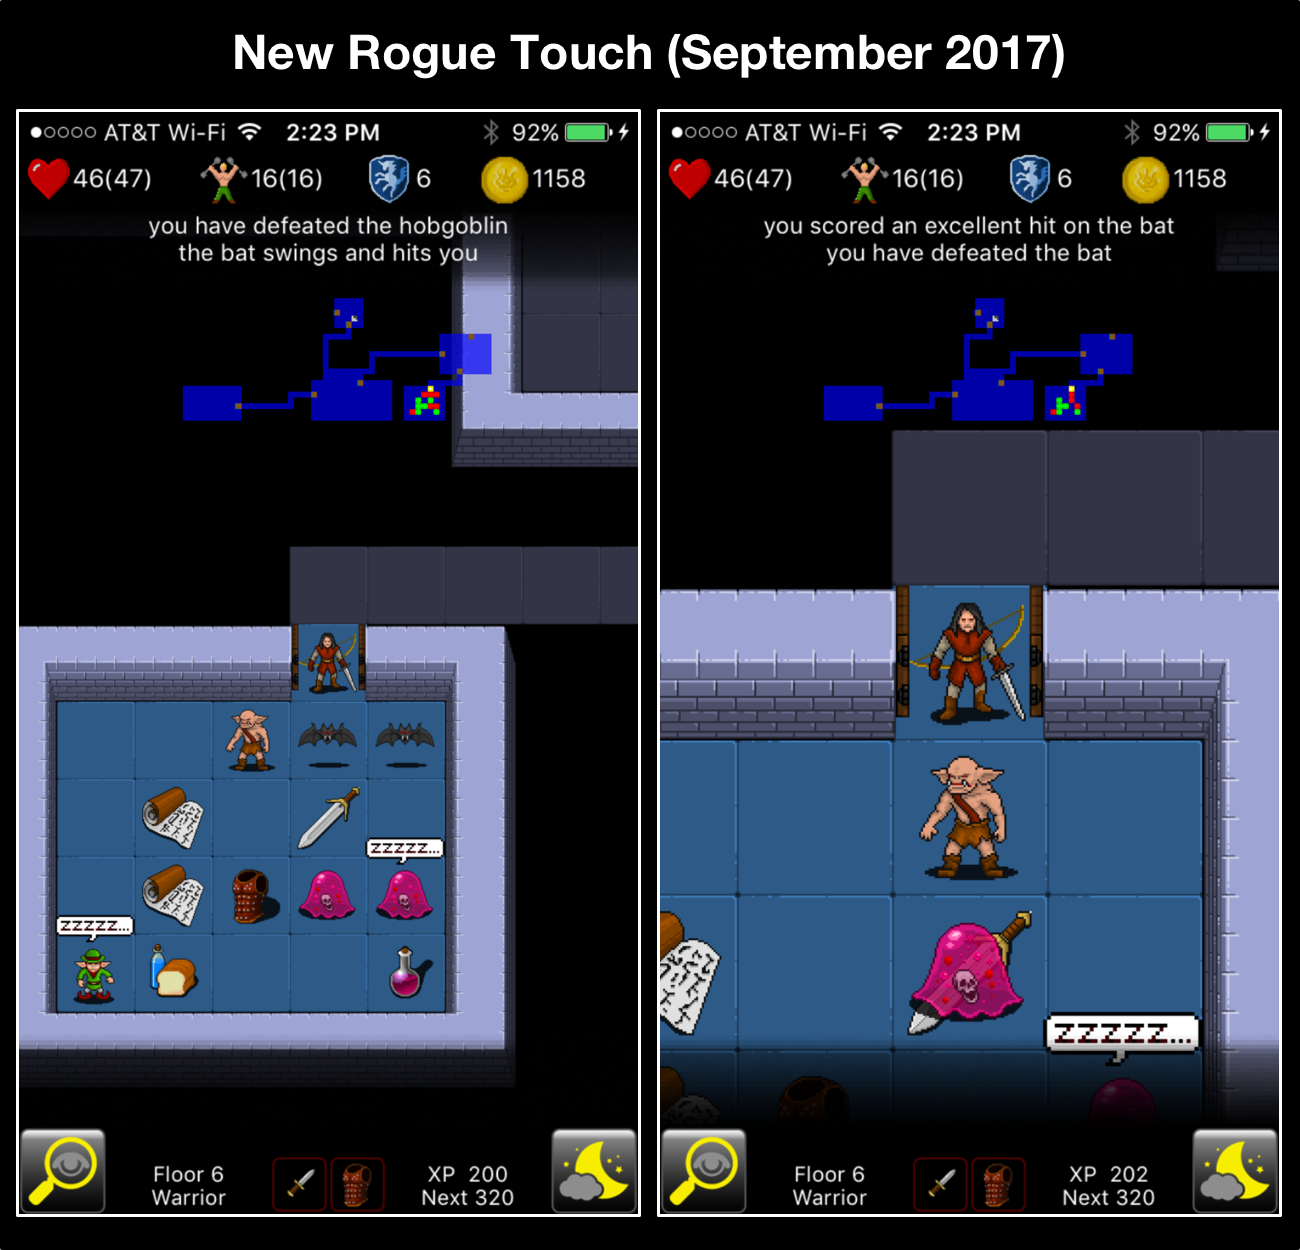 Original Rogue Touch (2009-2017)